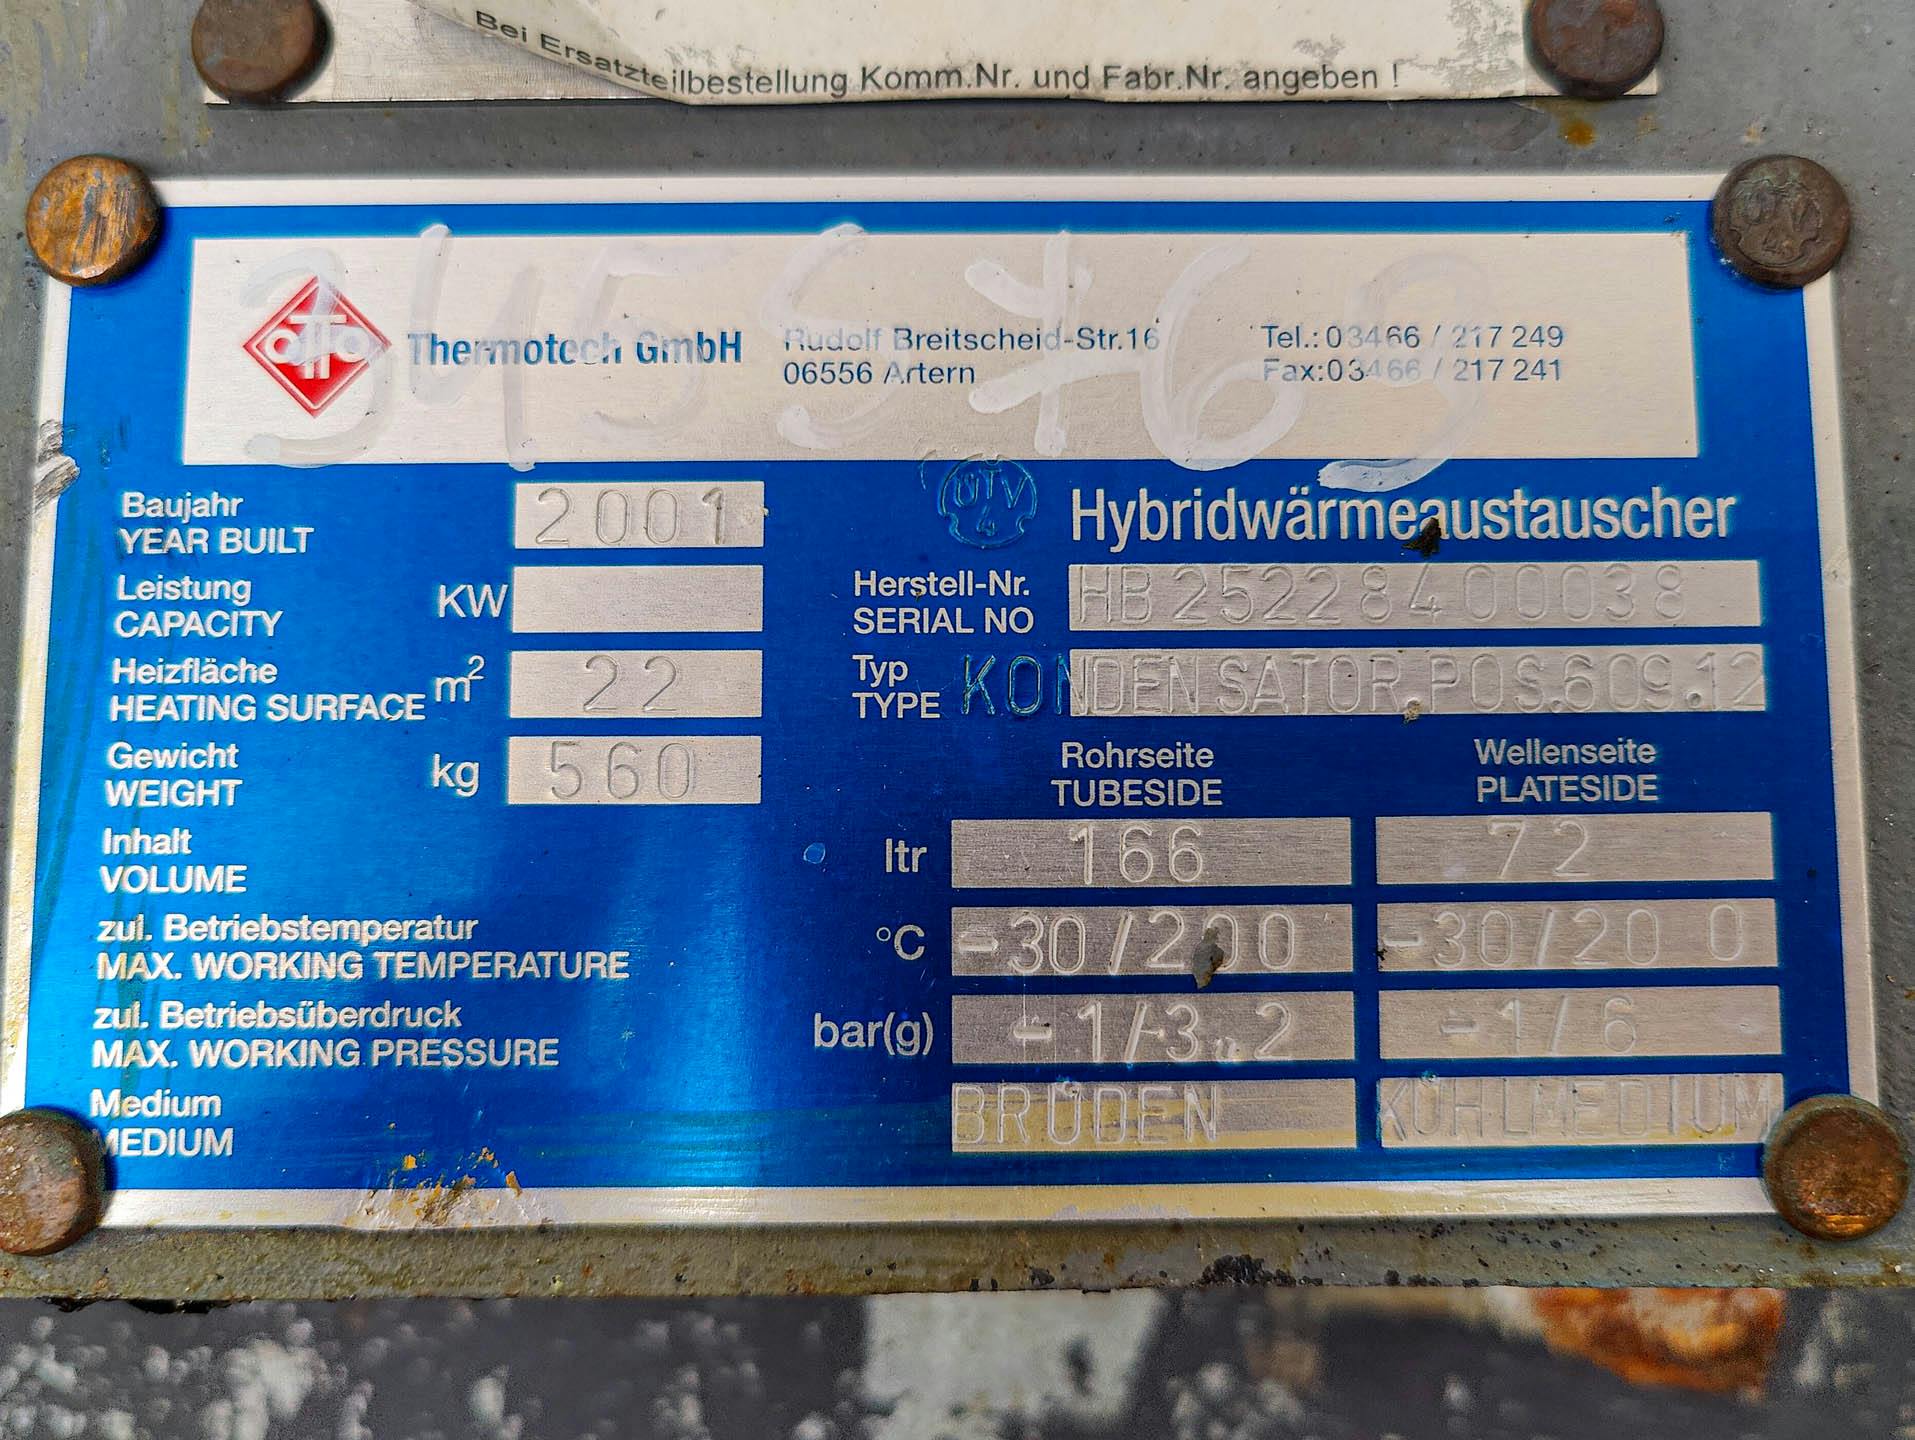 Unex Hybrid; fully welded plate heat exchanger - Platen warmtewisselaar - image 7